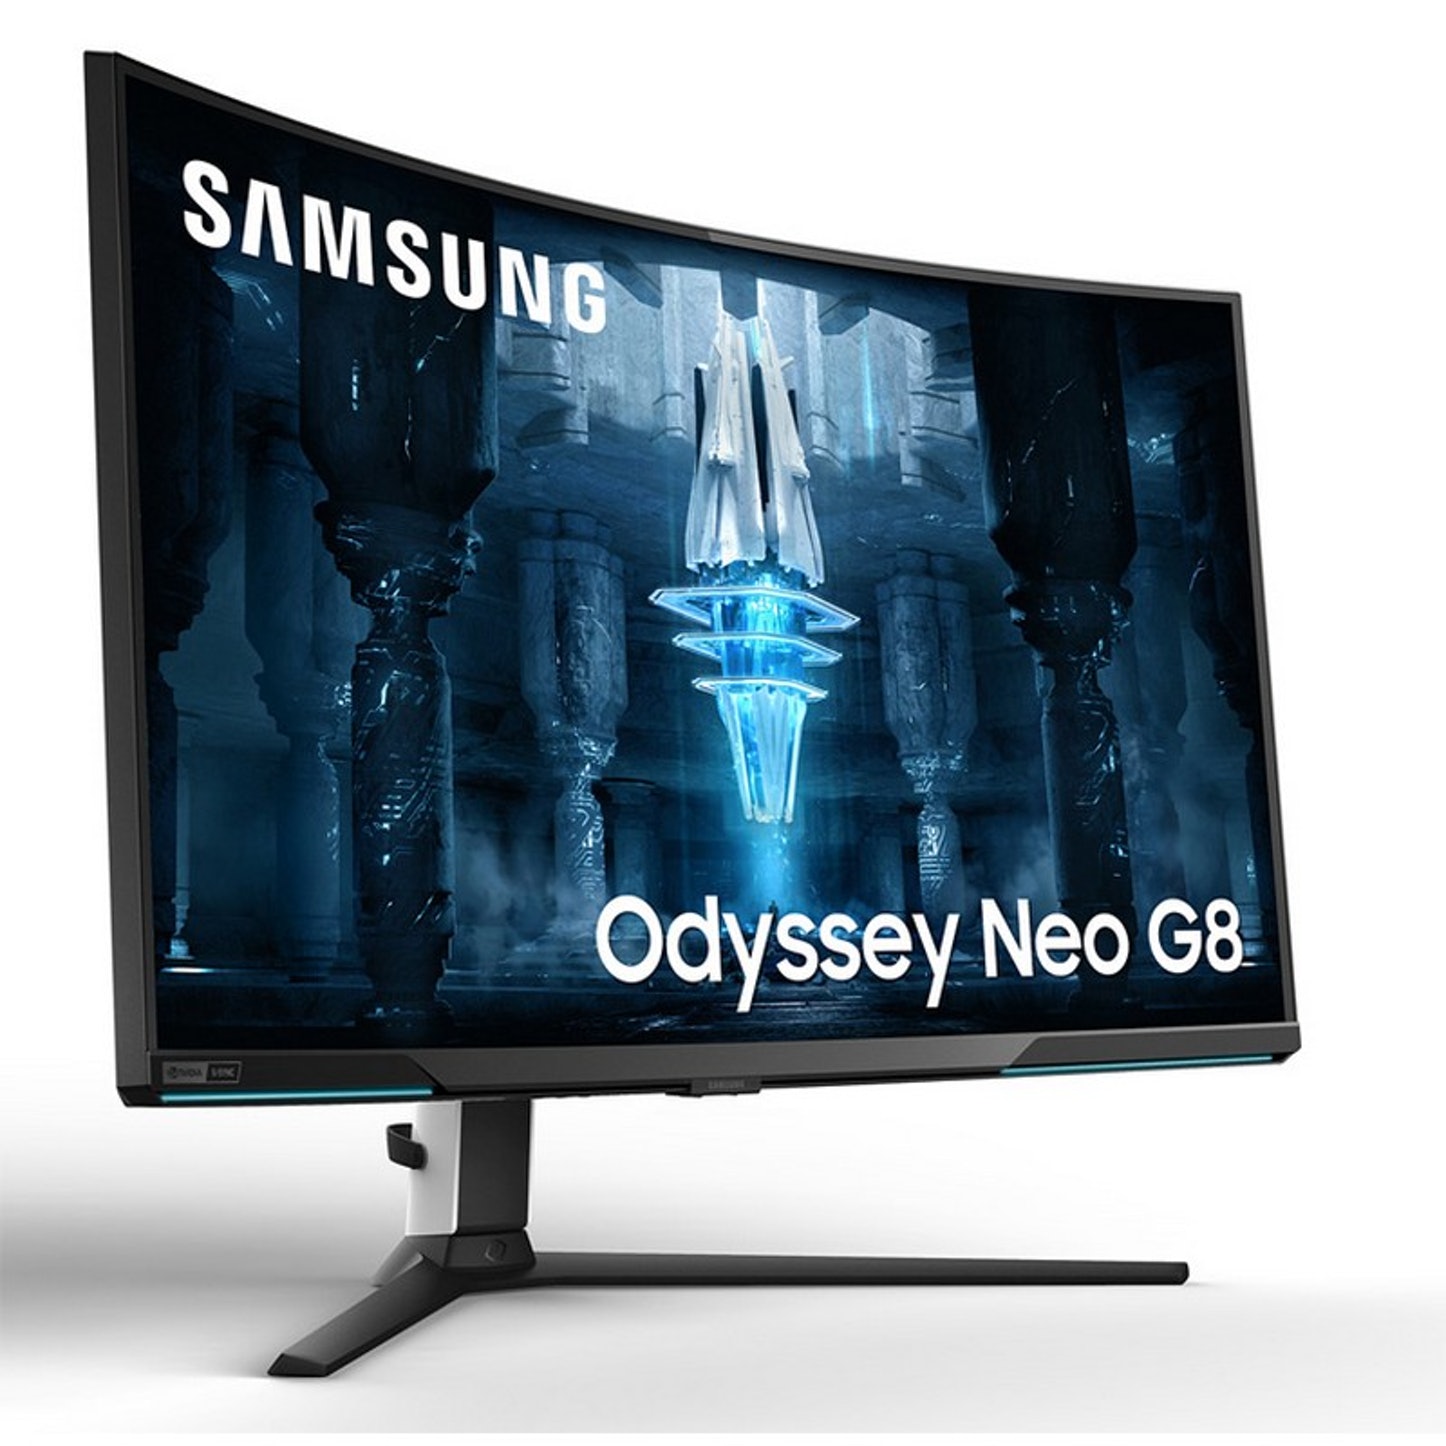 Samsung brings 240 Hz refresh rates to 4K monitors